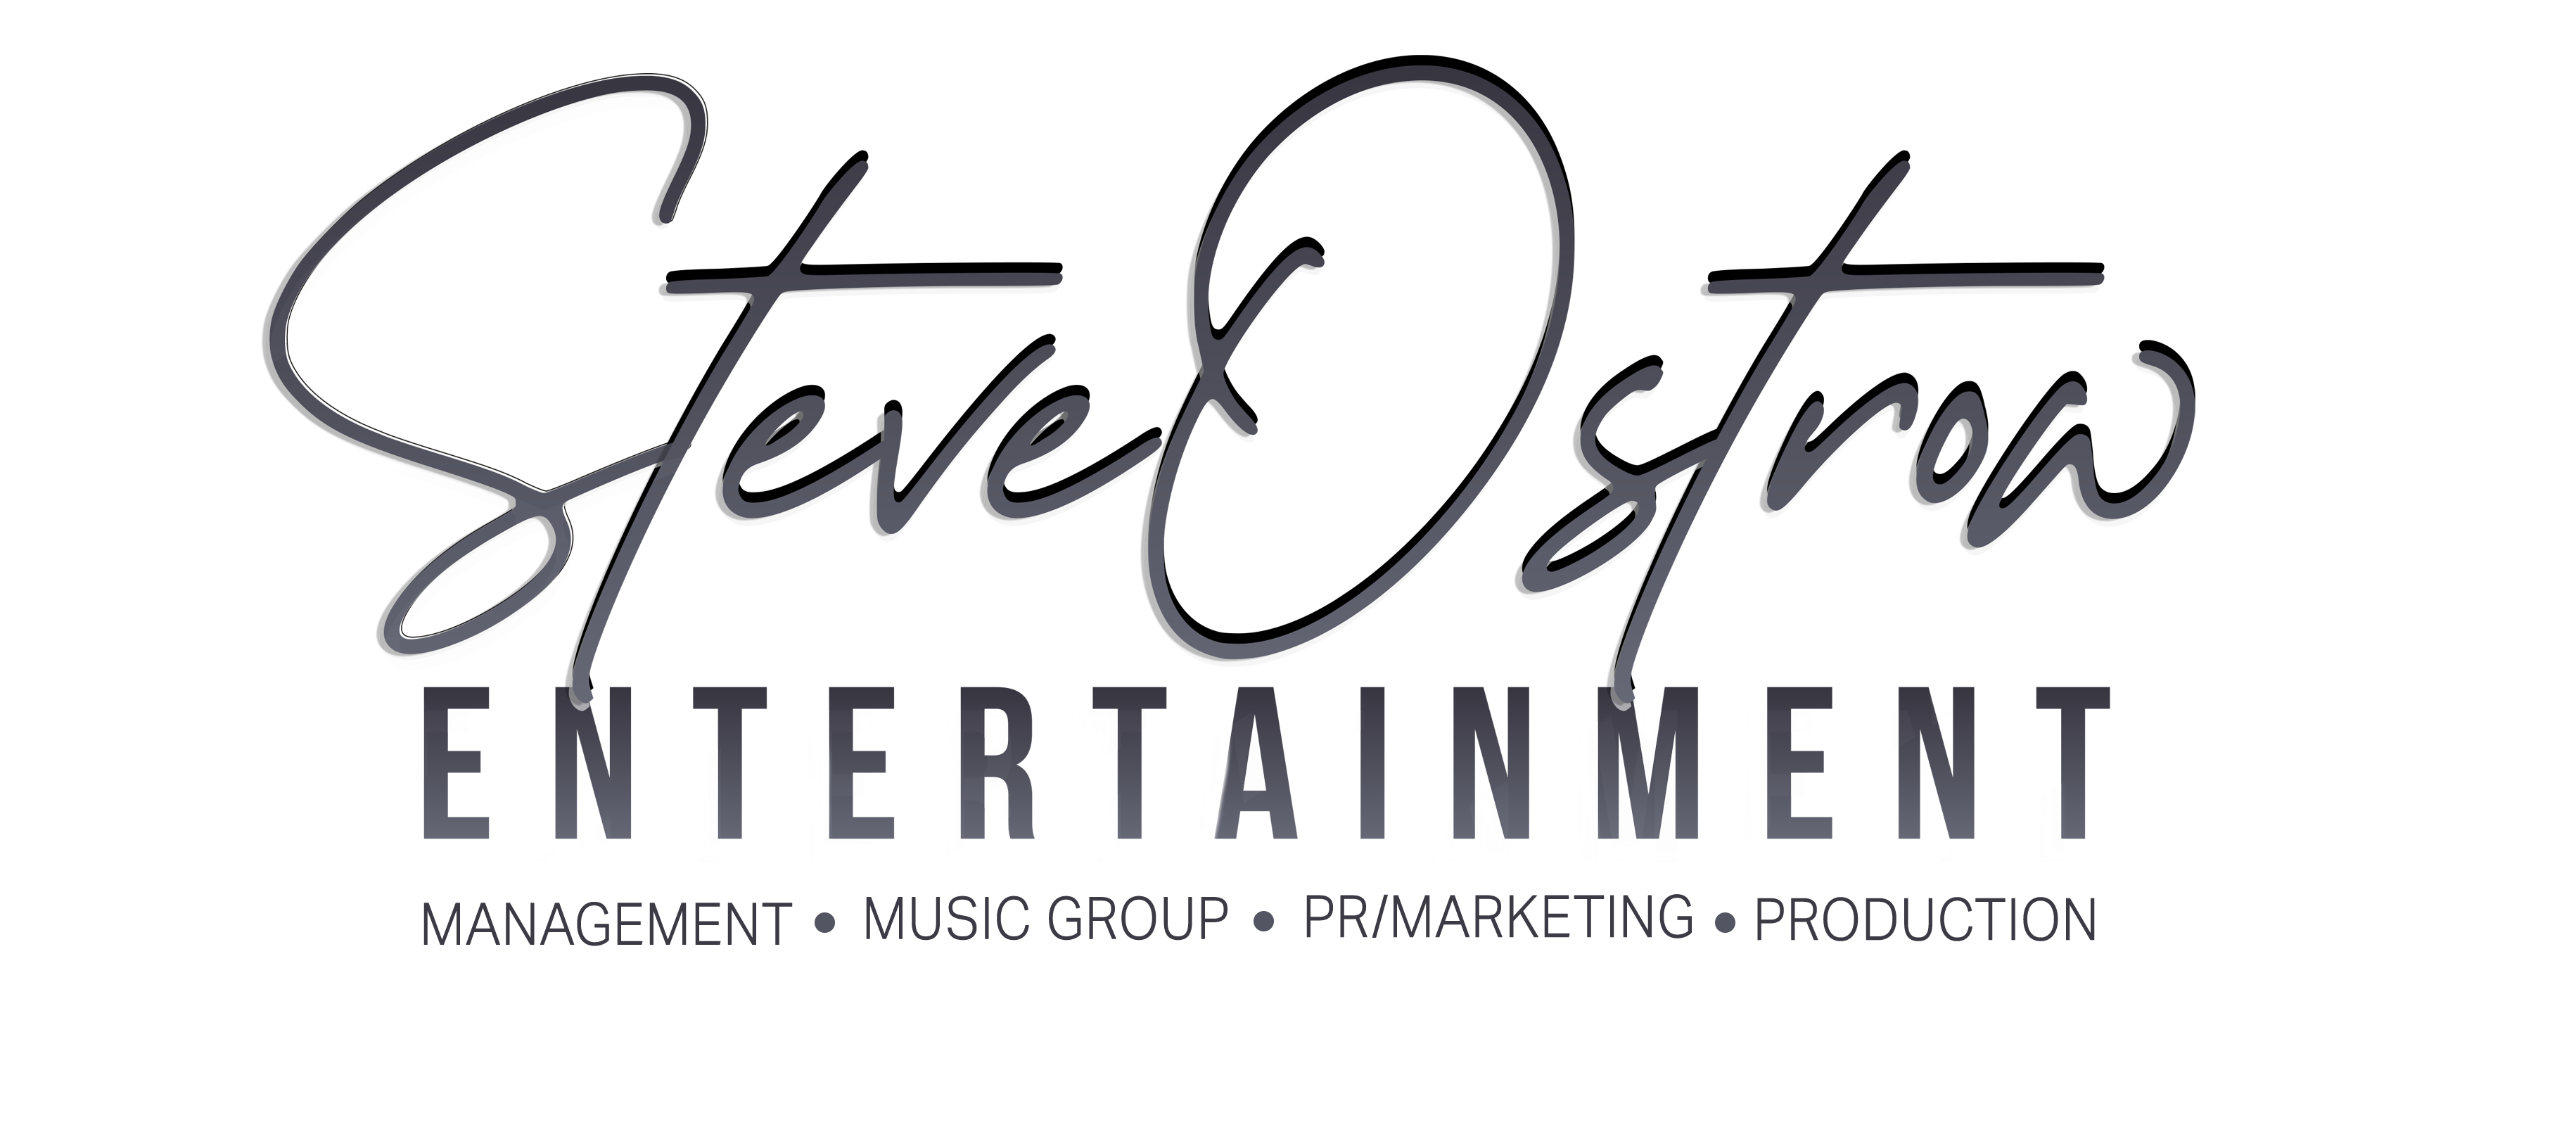 SteveOstrow Entertainment LLC